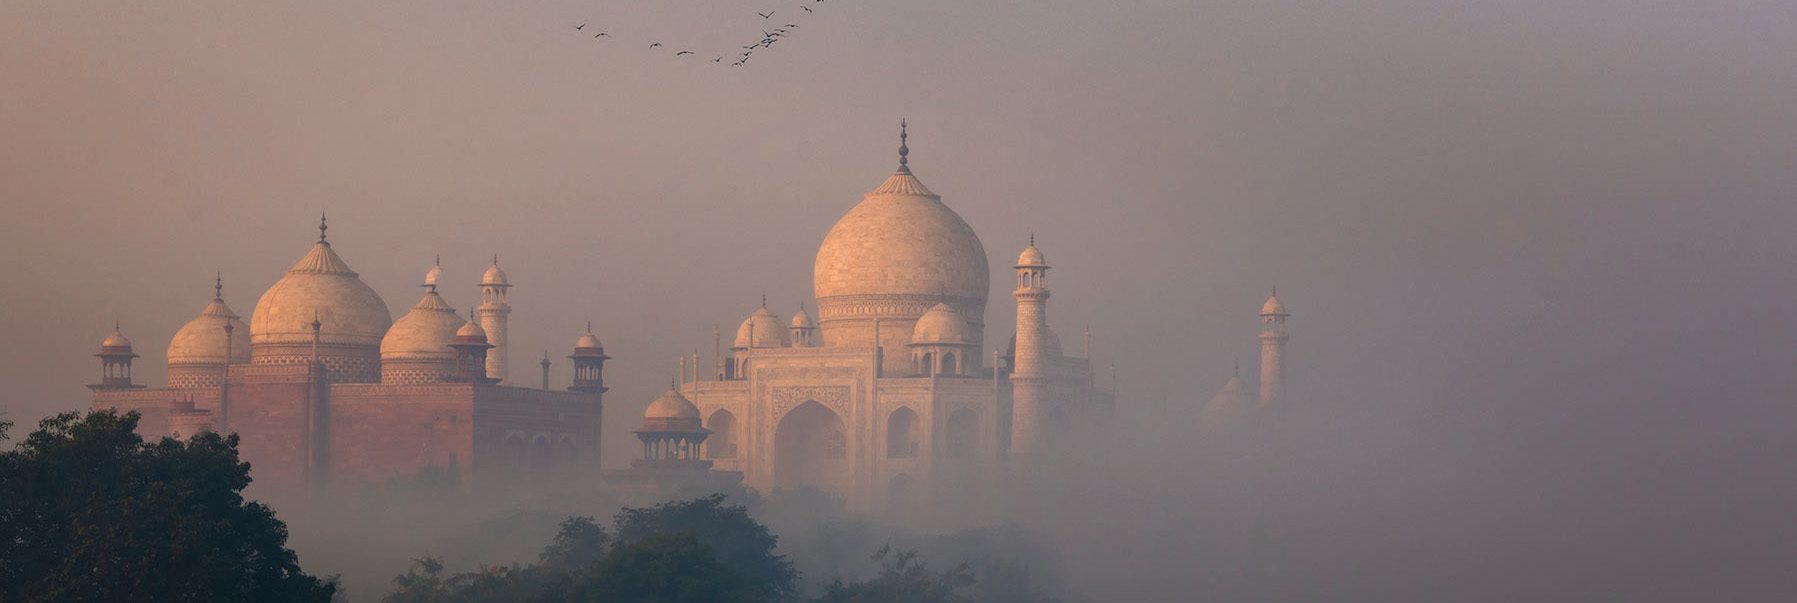 Taj Mahal Sunrise Tour from Delhi - Travel Guide and Itinerary